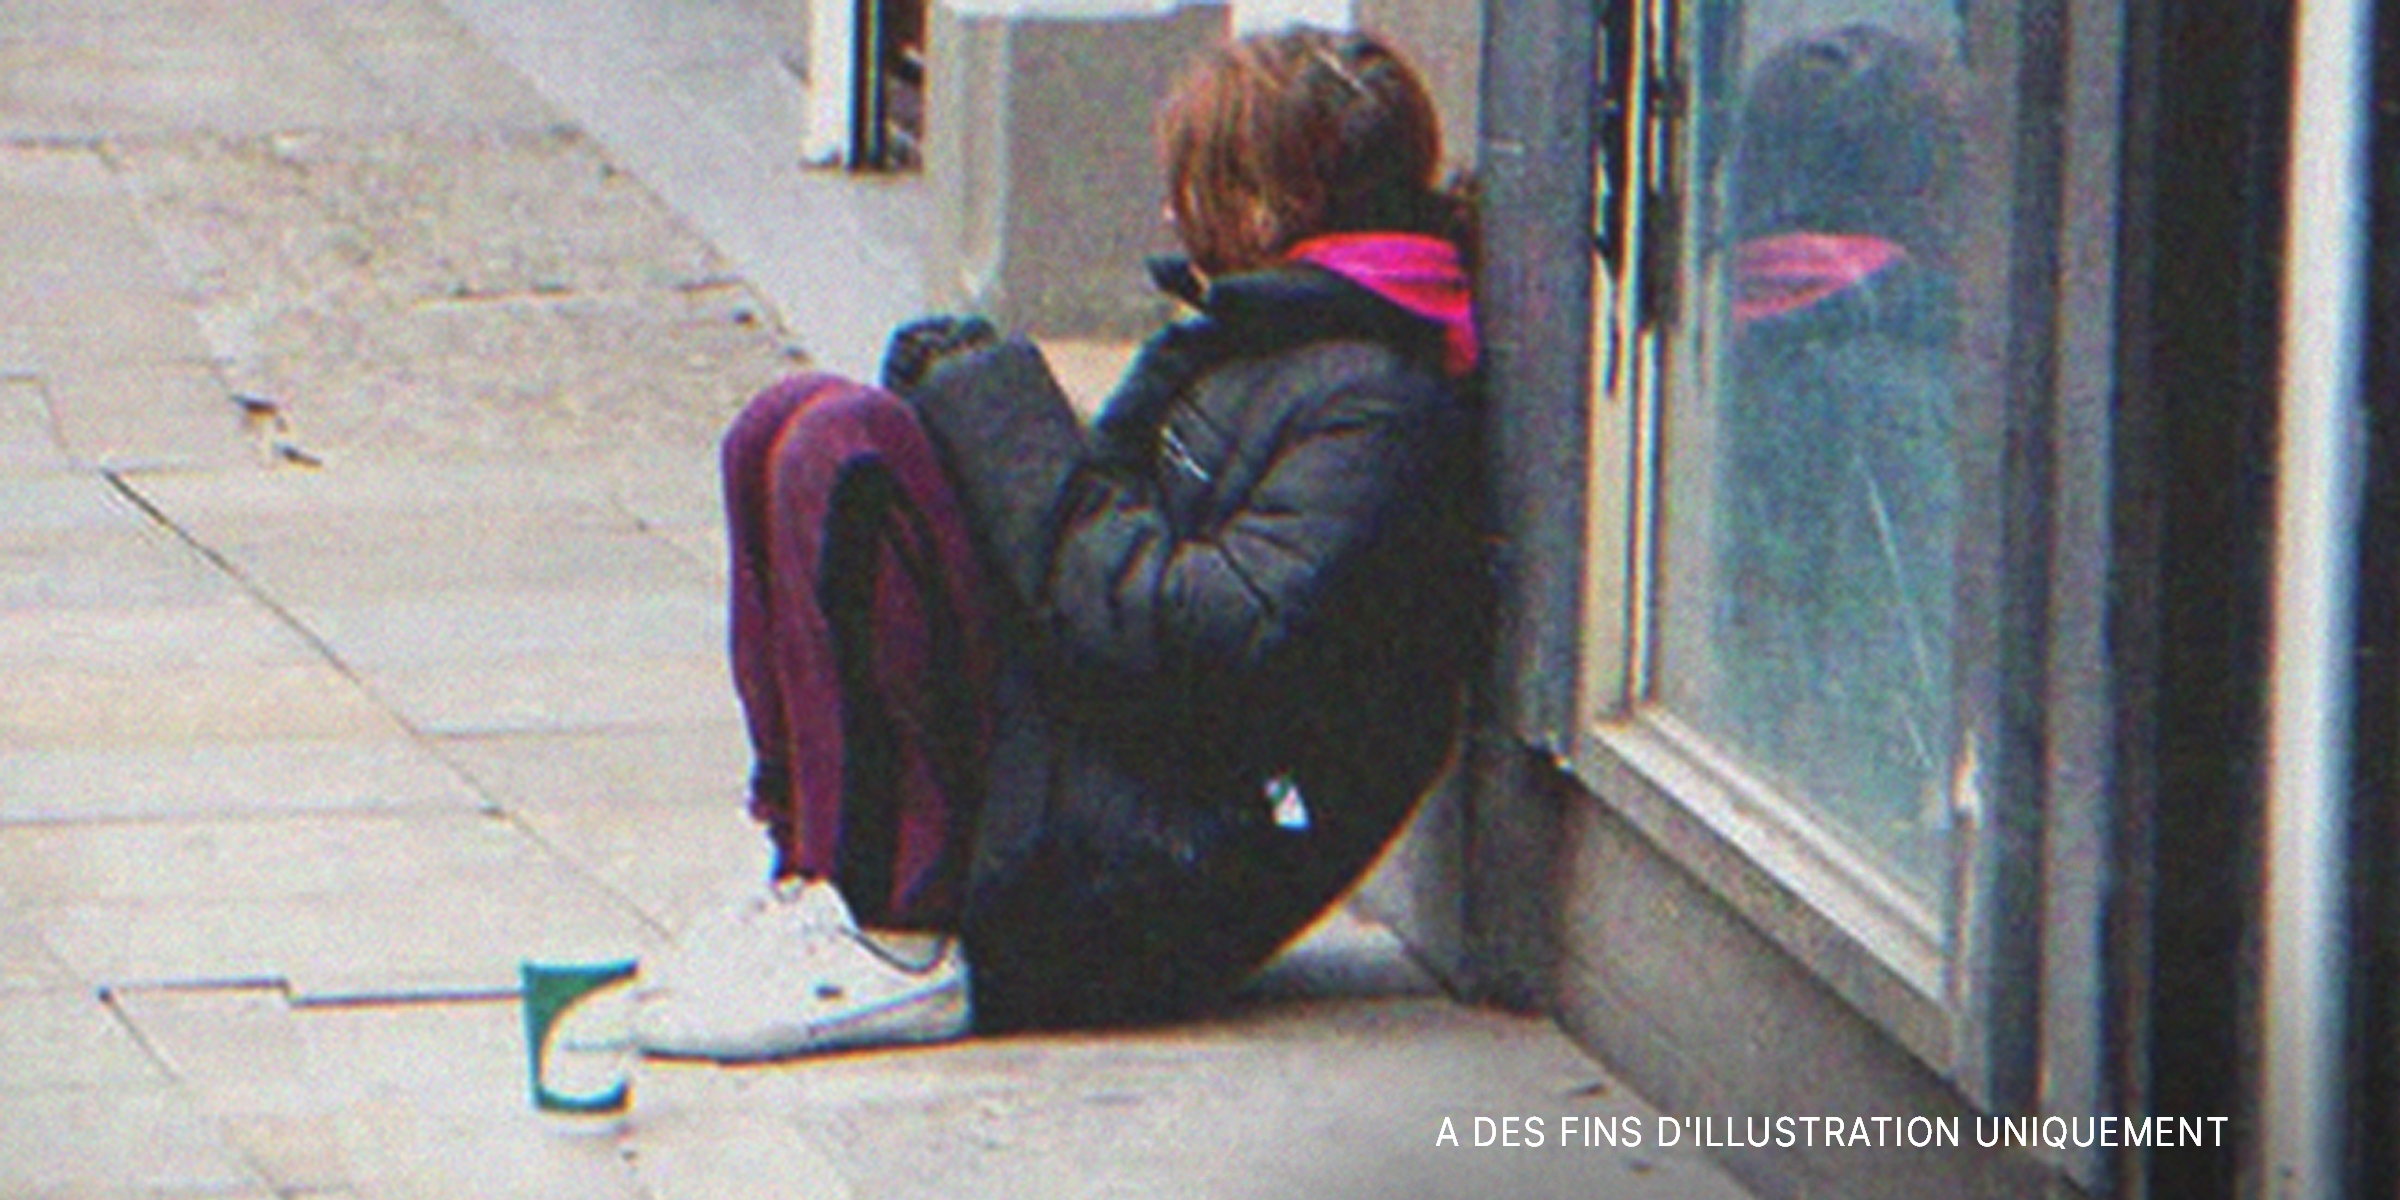 Une jeune fille assise dans la rue | Source : Shutterstock